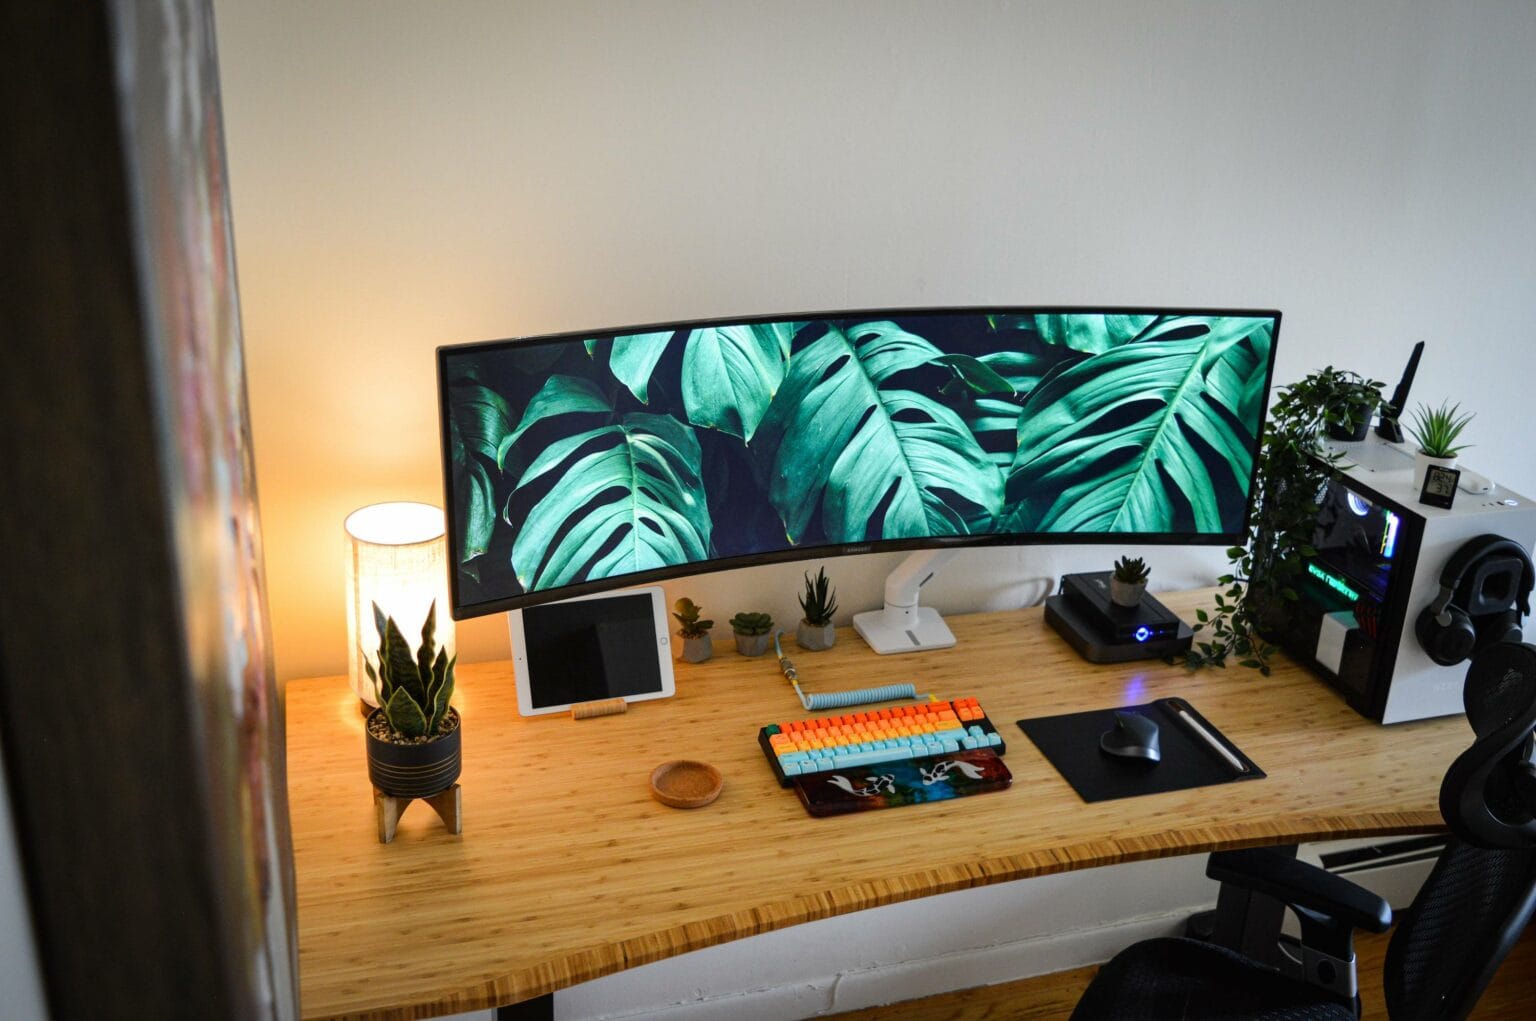 Mac mini setup